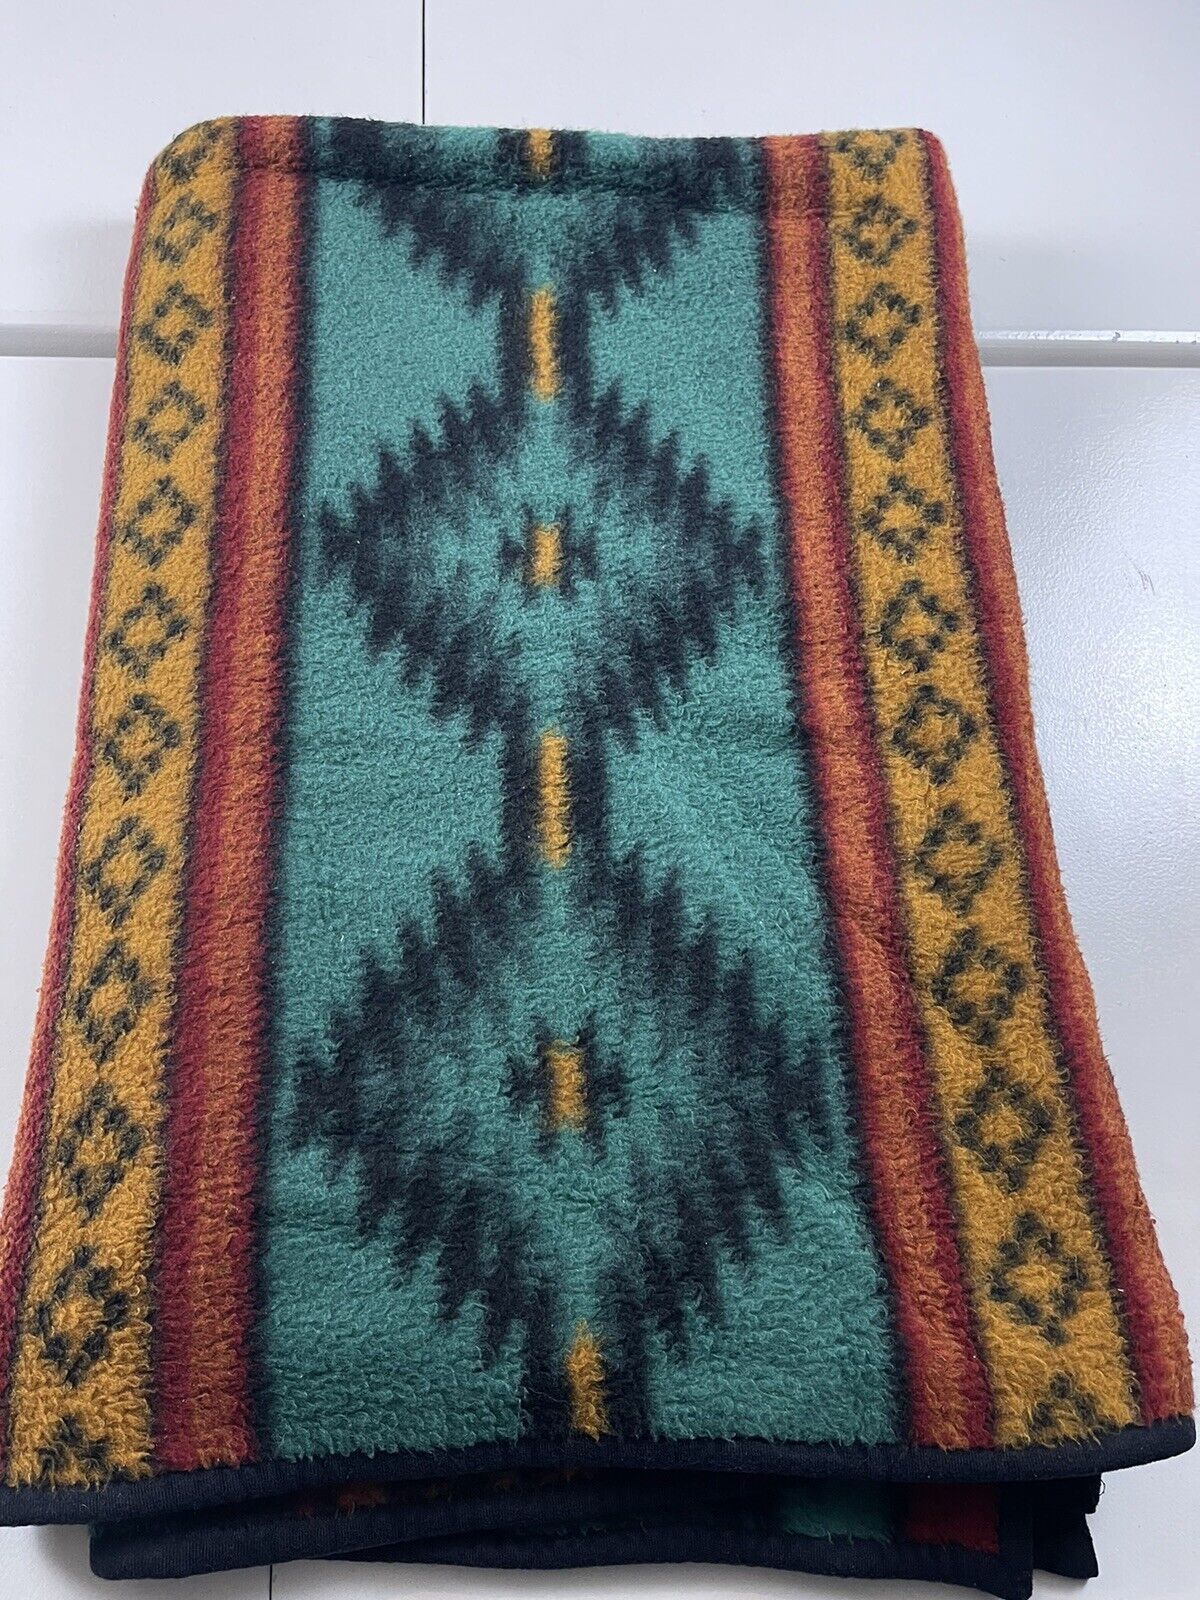 Vintage Biederlack Throw Blanket Aztec Print Multicolor Fleece 72x56 inches